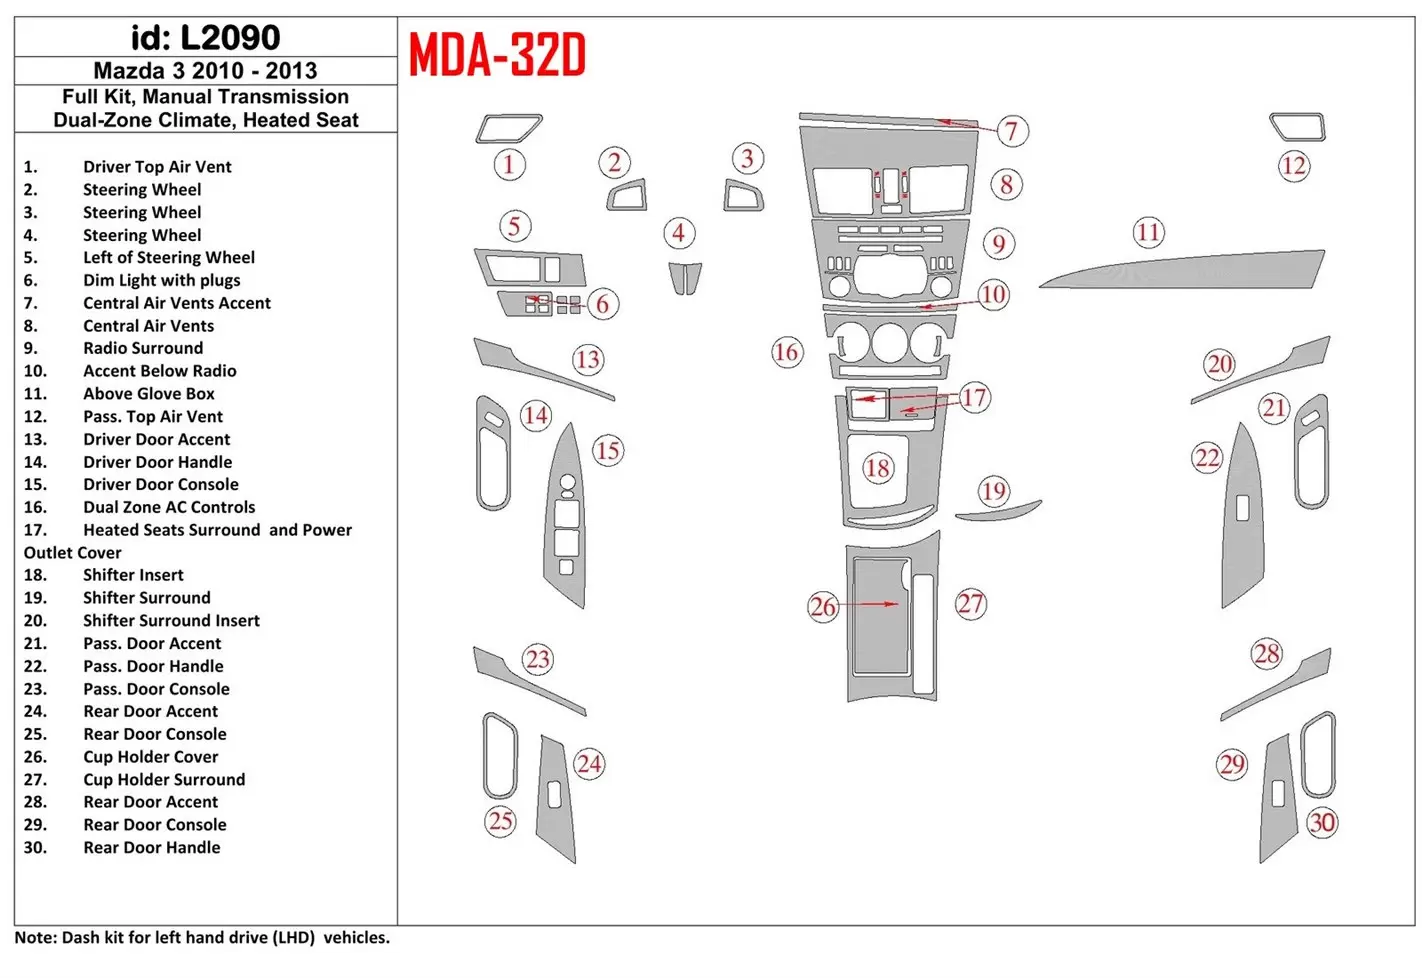 Mazda Mazda3 2010-2013 Voll Satz, Manual Gear Box, two-zone climate control, Heated Seats BD innenausstattung armaturendekor coc